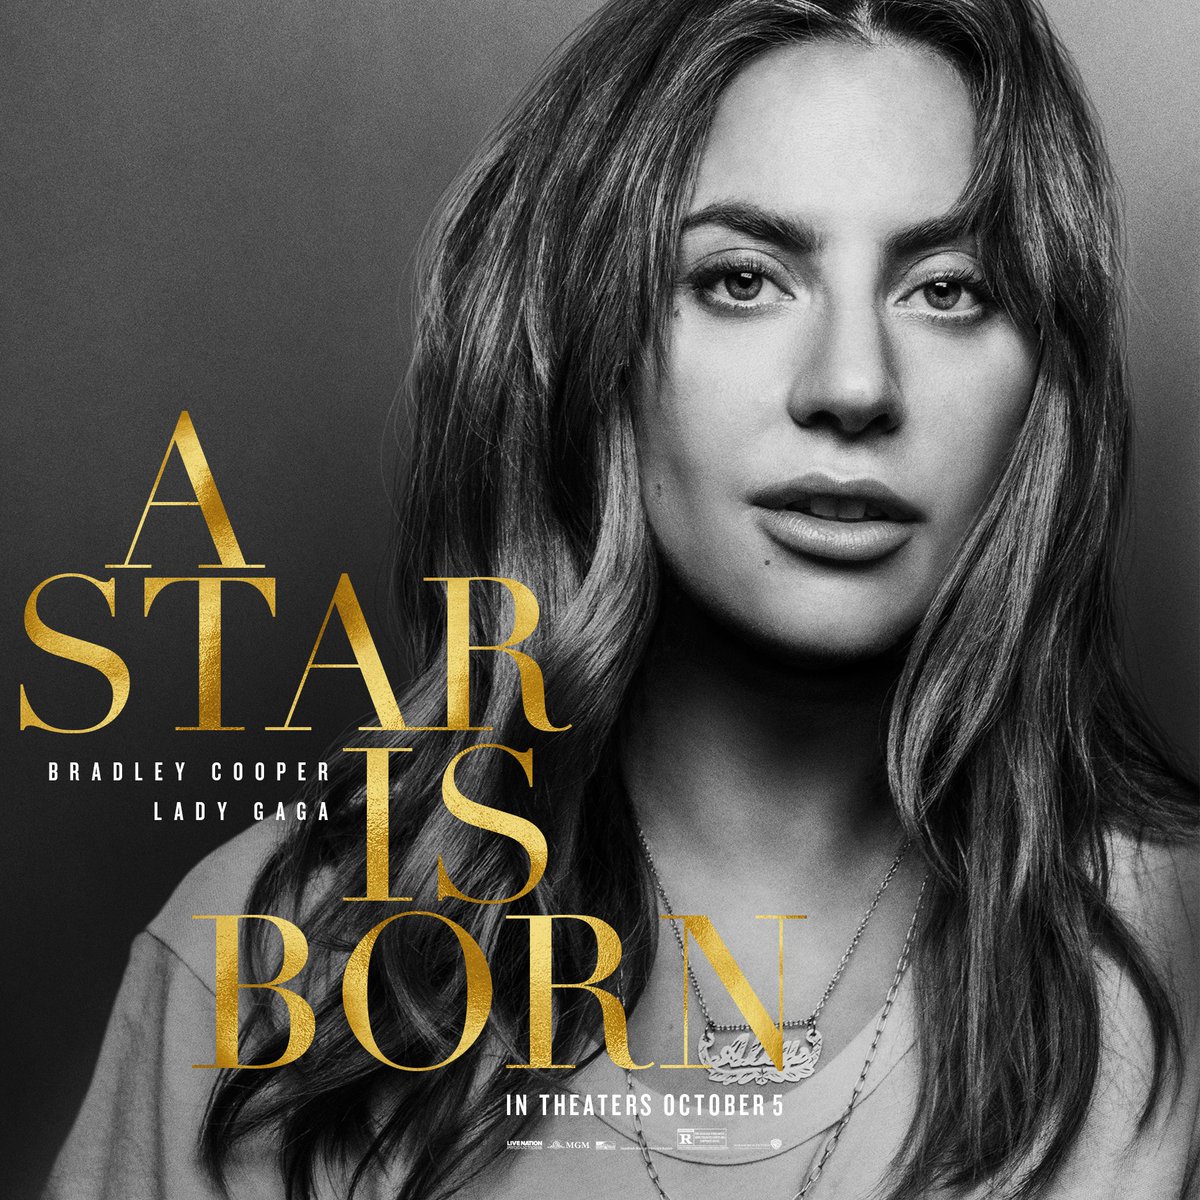 RT @starisbornmovie: Lady Gaga. #AStarIsBorn https://t.co/pYtRPed2bv